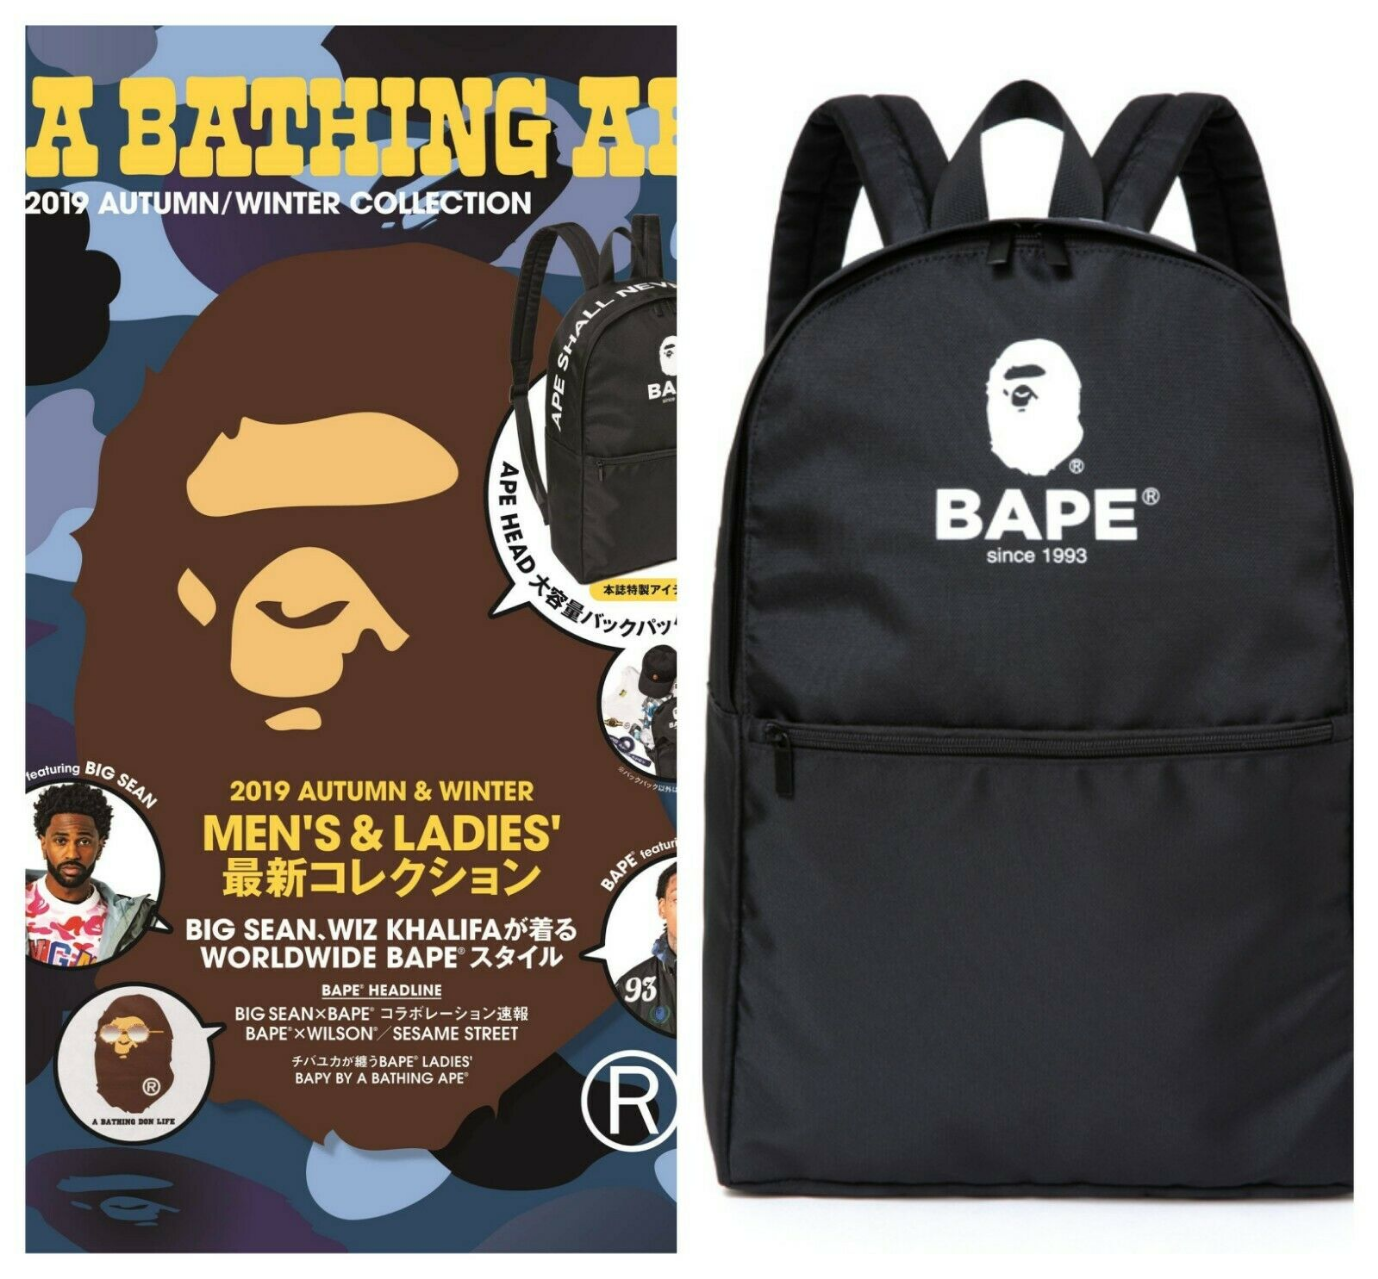 A BATHING APE 2019 WINTER Collection BAPE Backpack Bag Black Japan